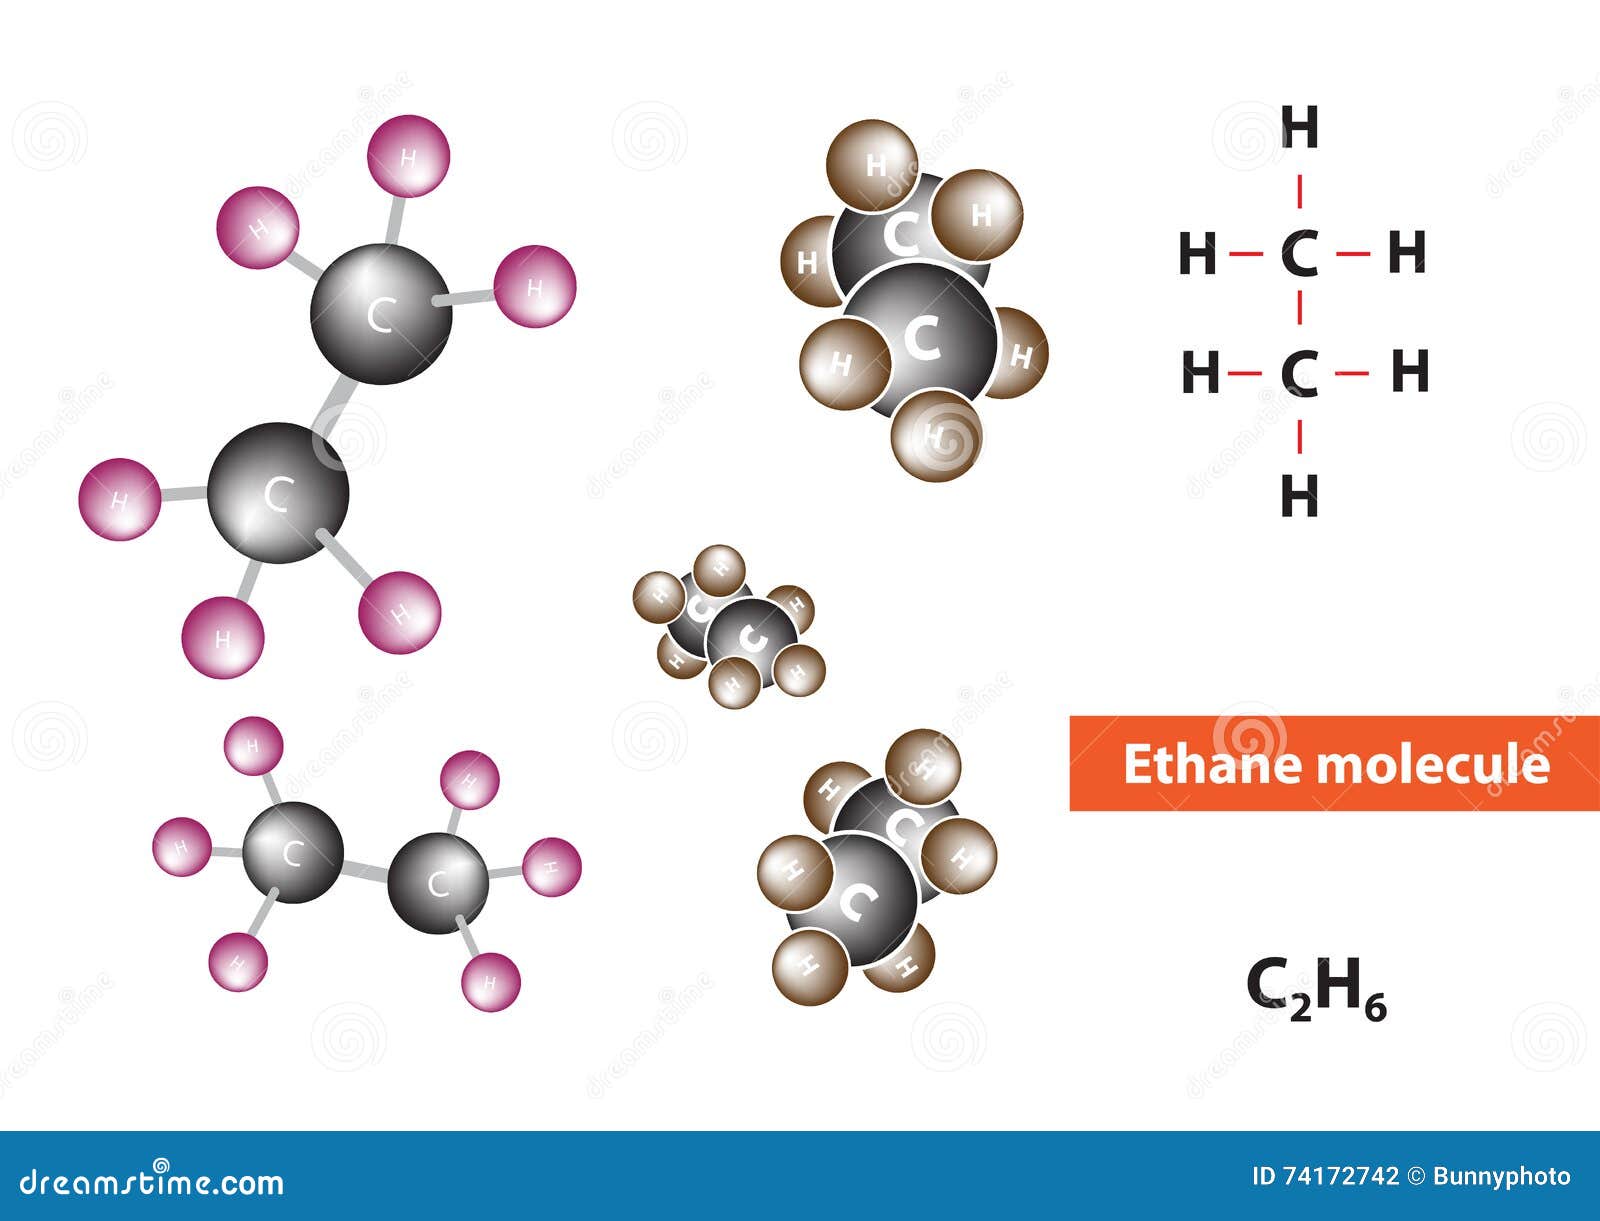 Ethane molecular structure stock vector. Illustration of molecular ...